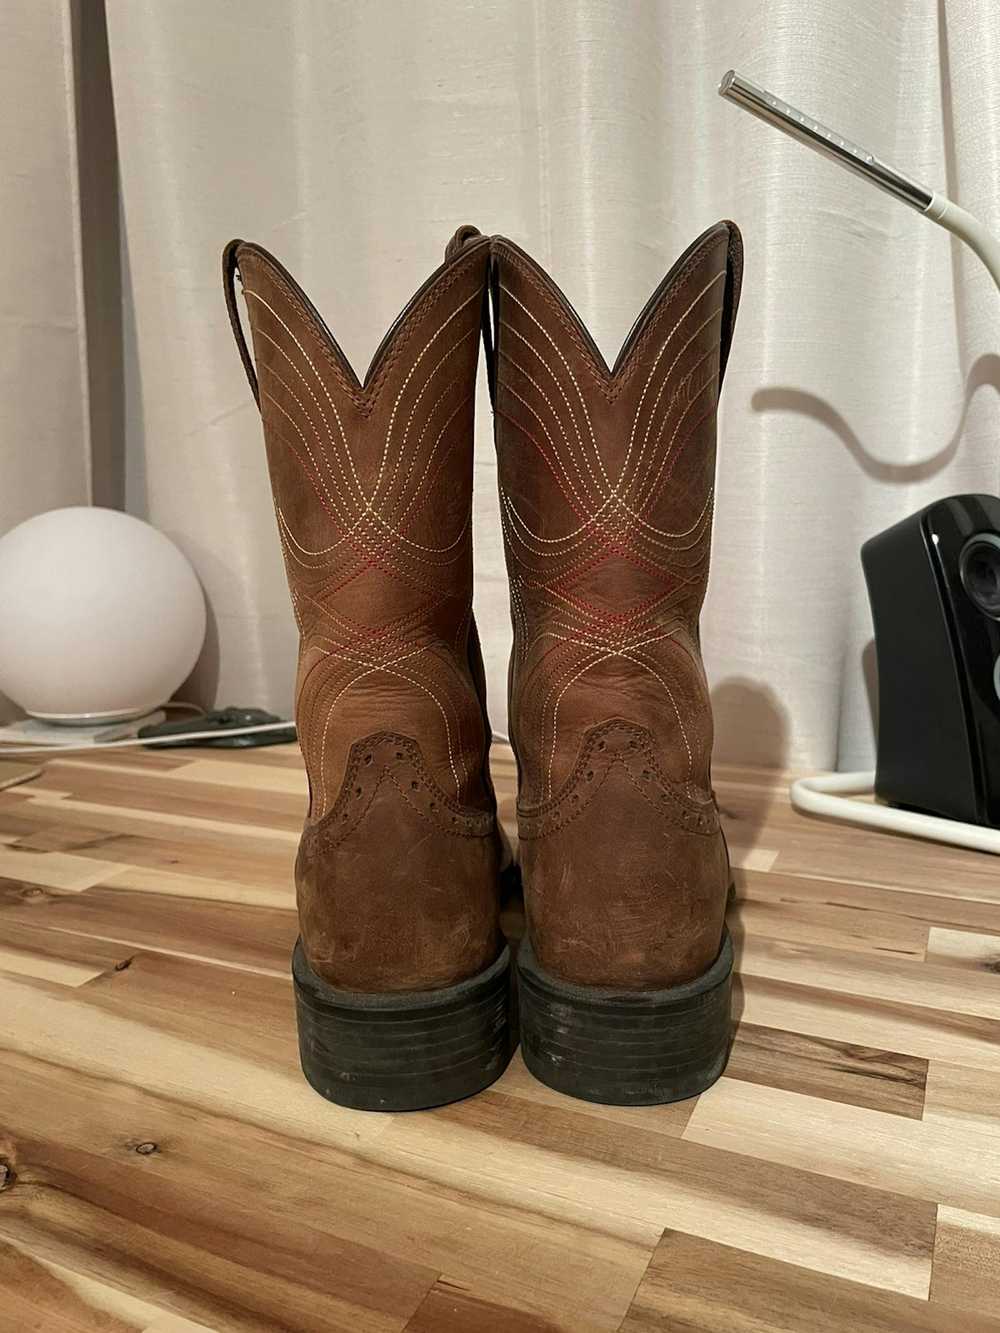 Ariat Ariat cowboy boots - image 3